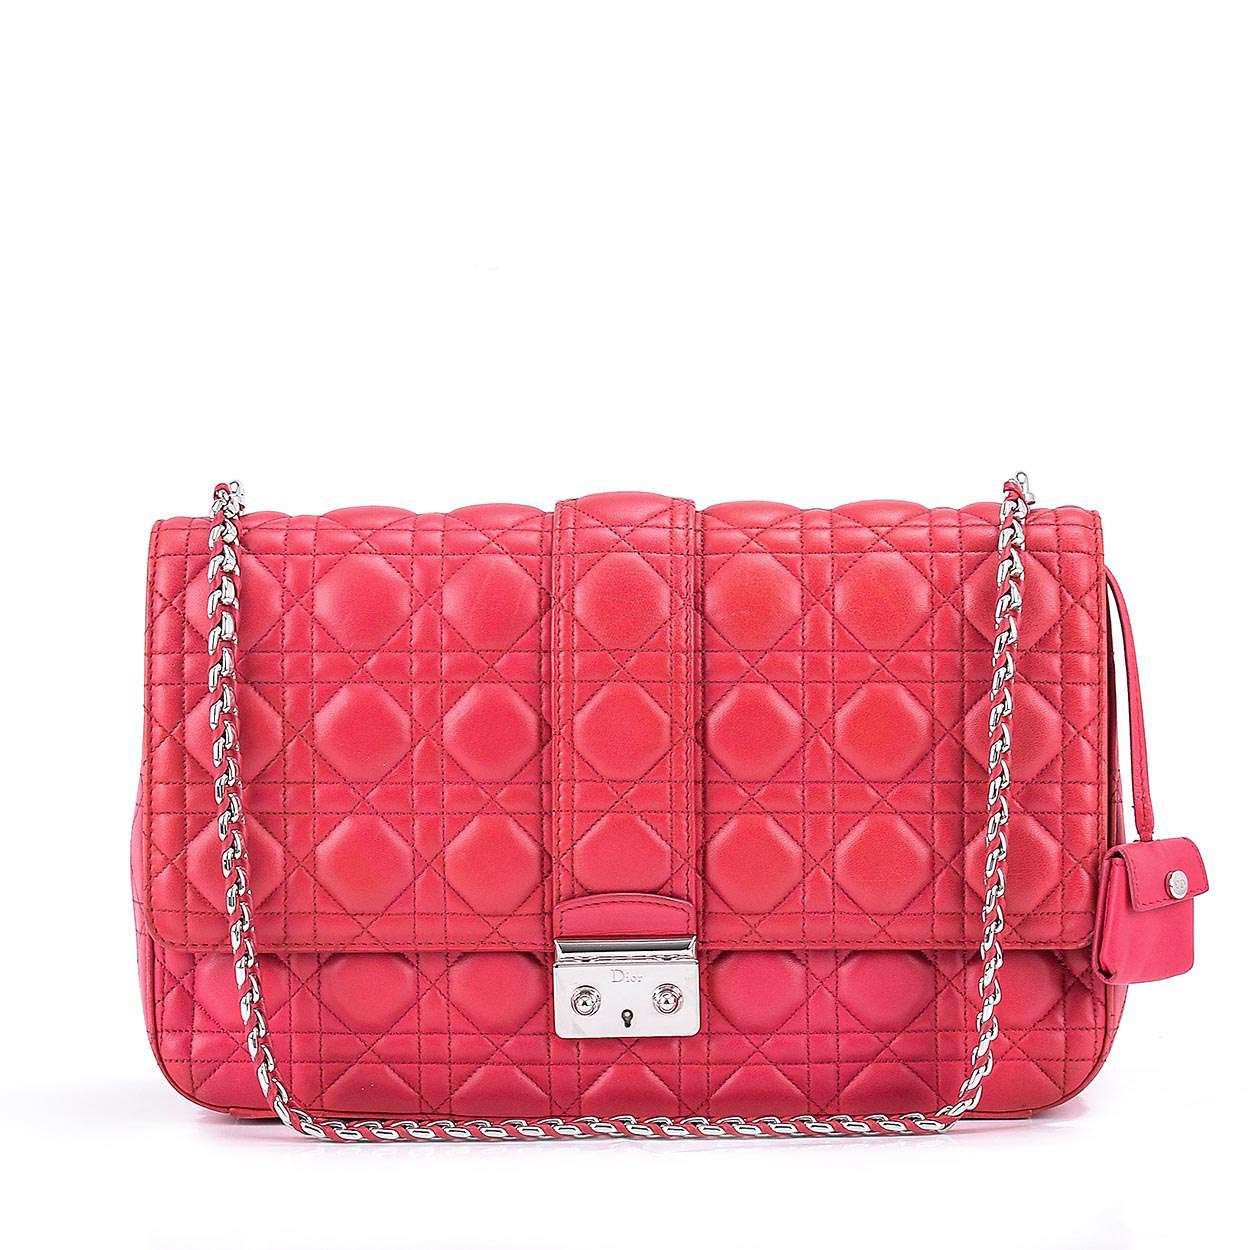 Christian Dior - Fuchsia Cannage Leather Small Flap Bag